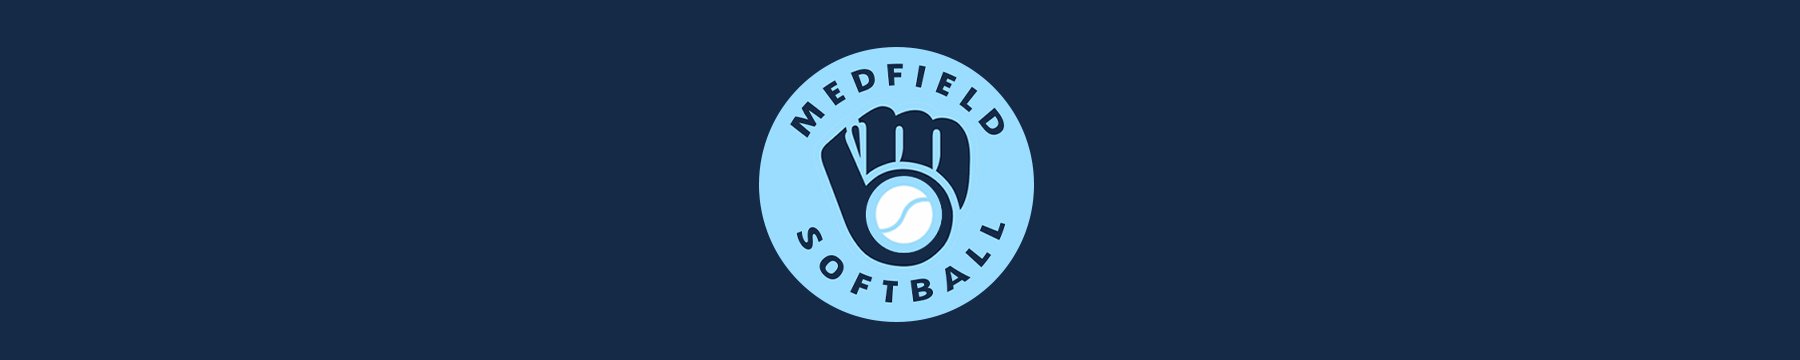 Medfield Youth Softball